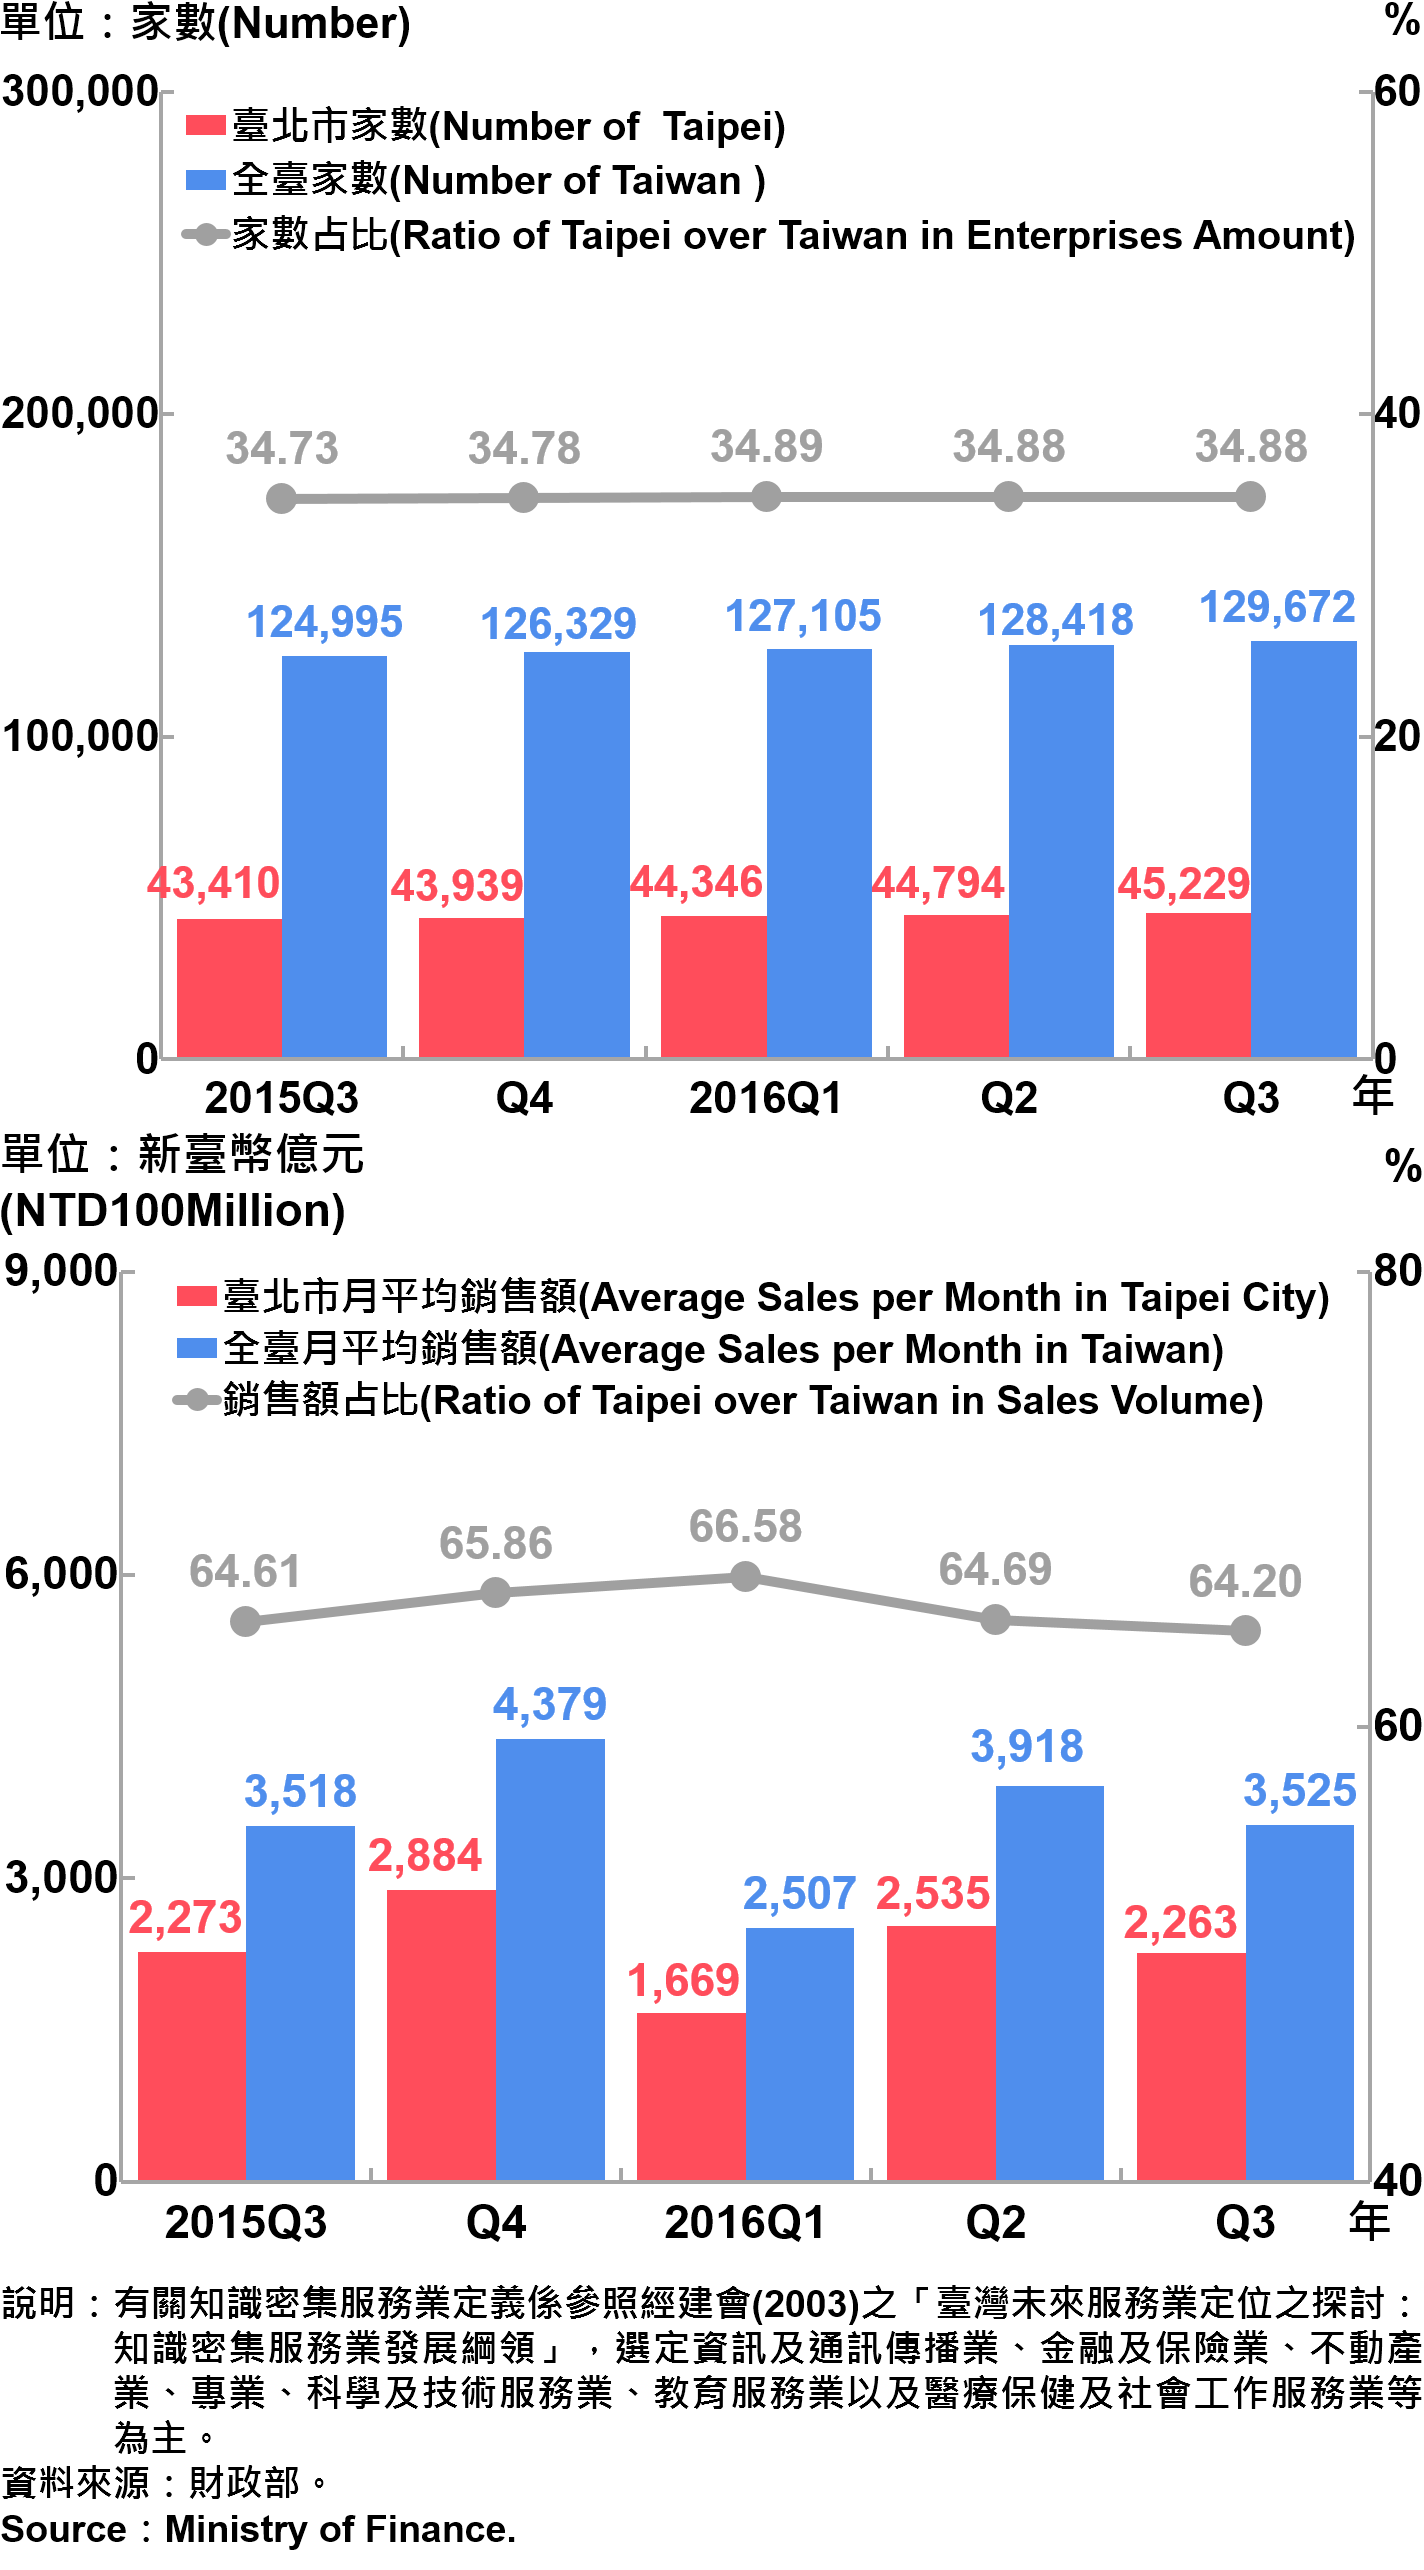 圖17、臺北市知識密集型服務業之家數及銷售額—2016Q3 Statistics Knowledge Intensive Service Industry in Taipei—2016Q3